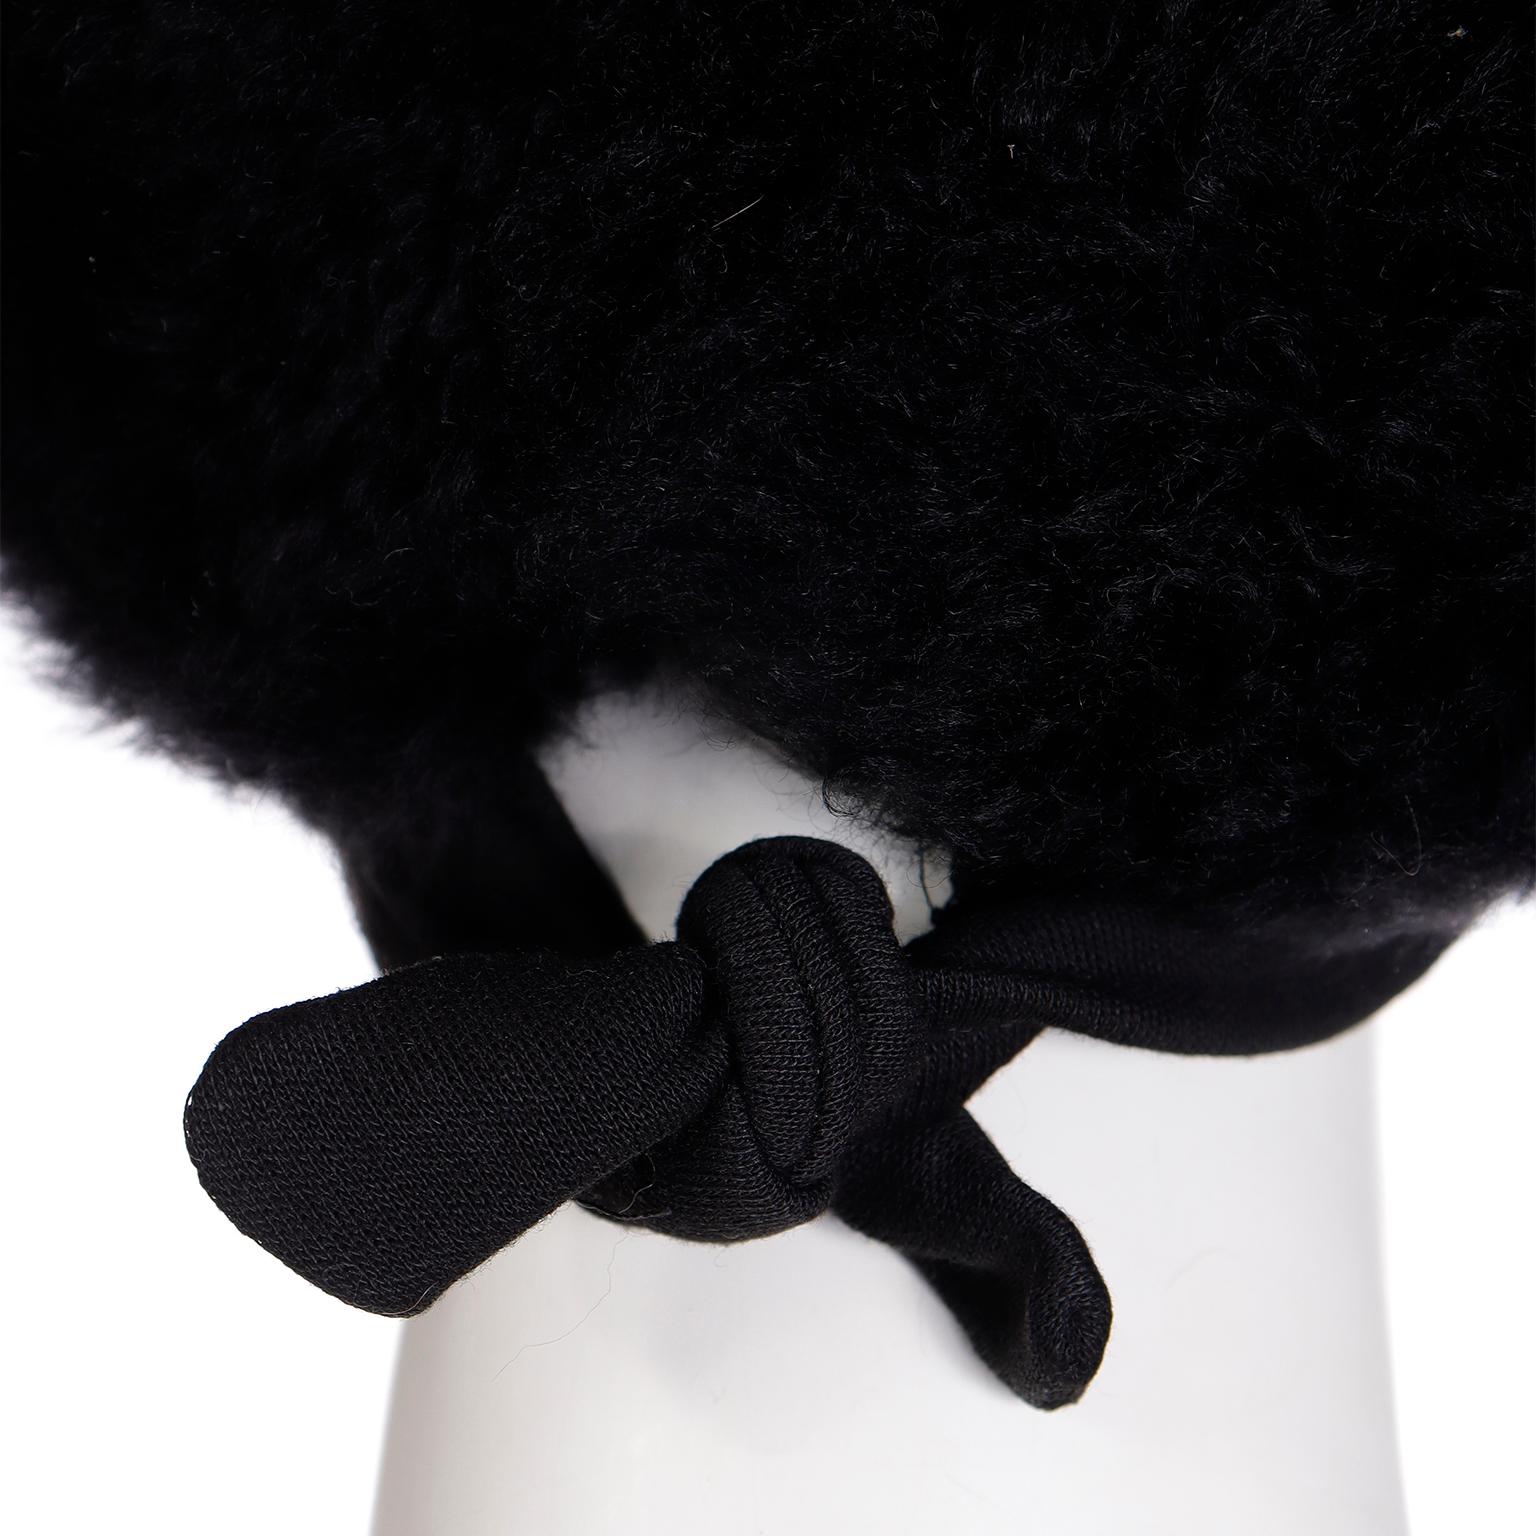 Yves Saint Laurent 1970s Russian inspired Vintage Black Fur Hat For Sale 2